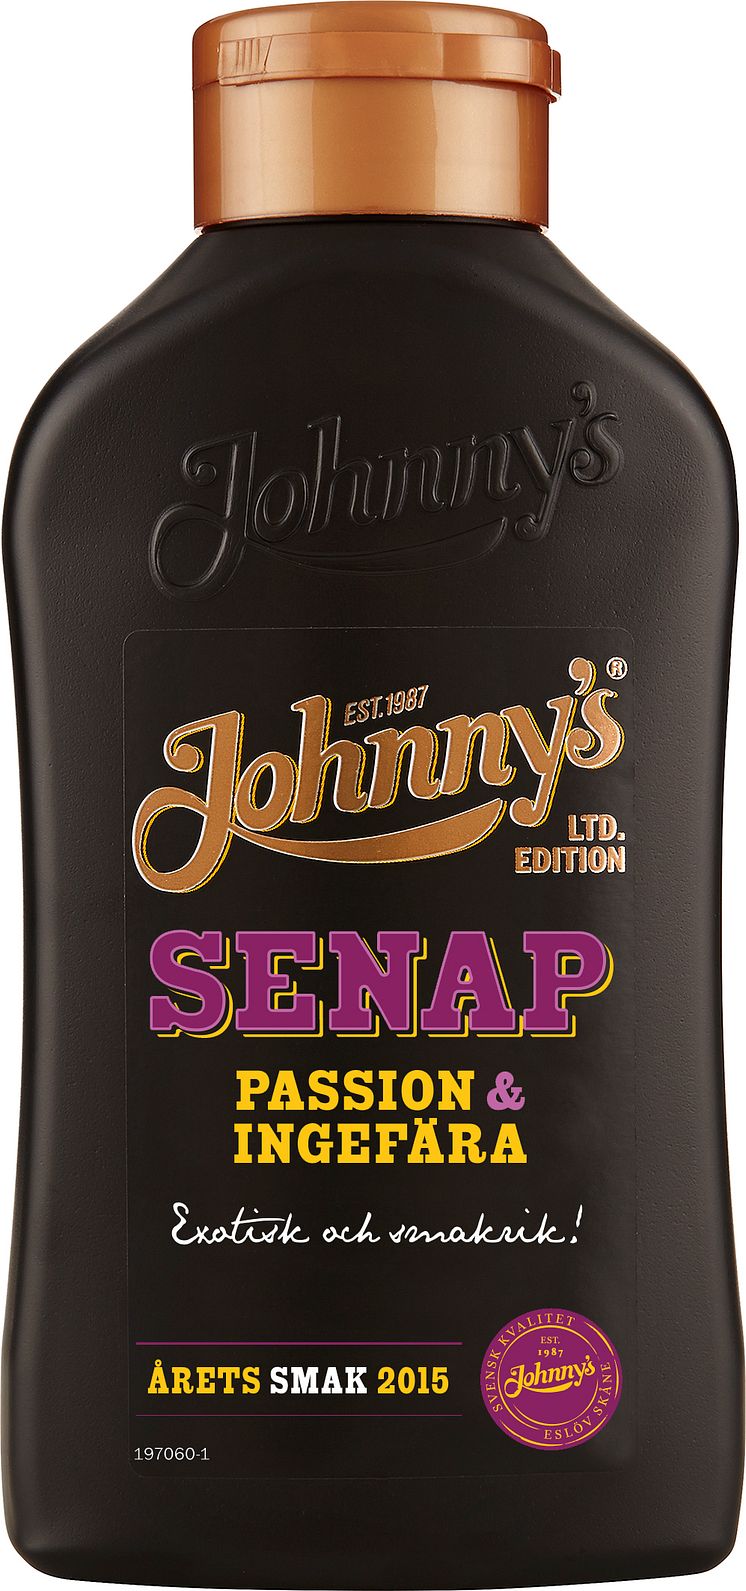 Johnny's senap passion & ingefära